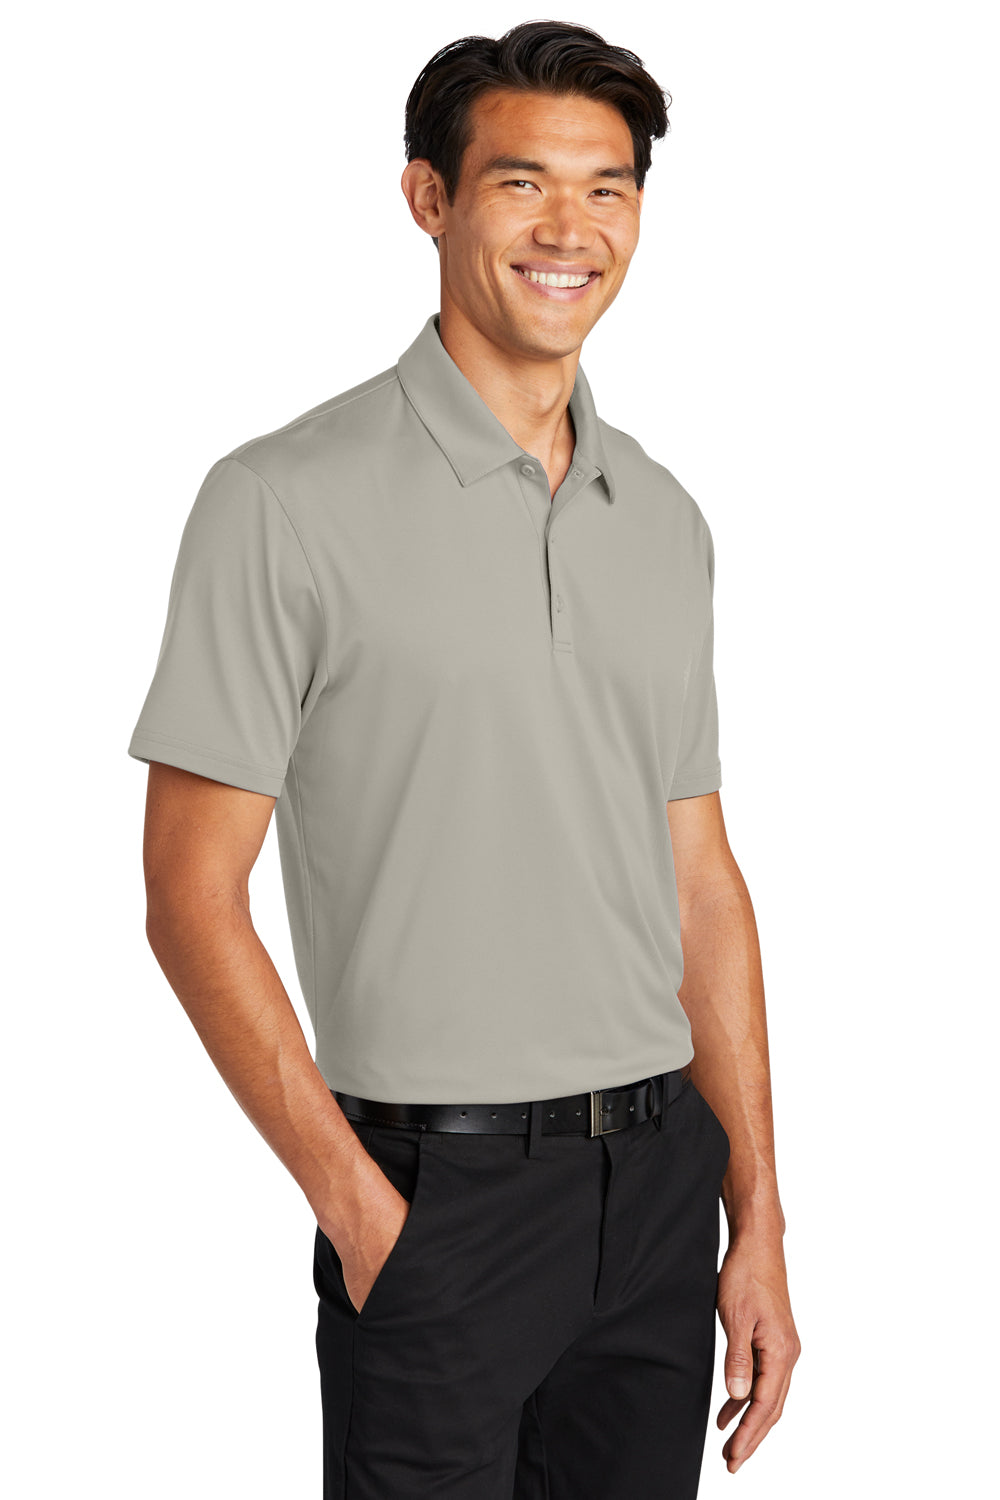 Port Authority K398 Staff Performance Short Sleeve Polo Shirt Silver Grey 3Q